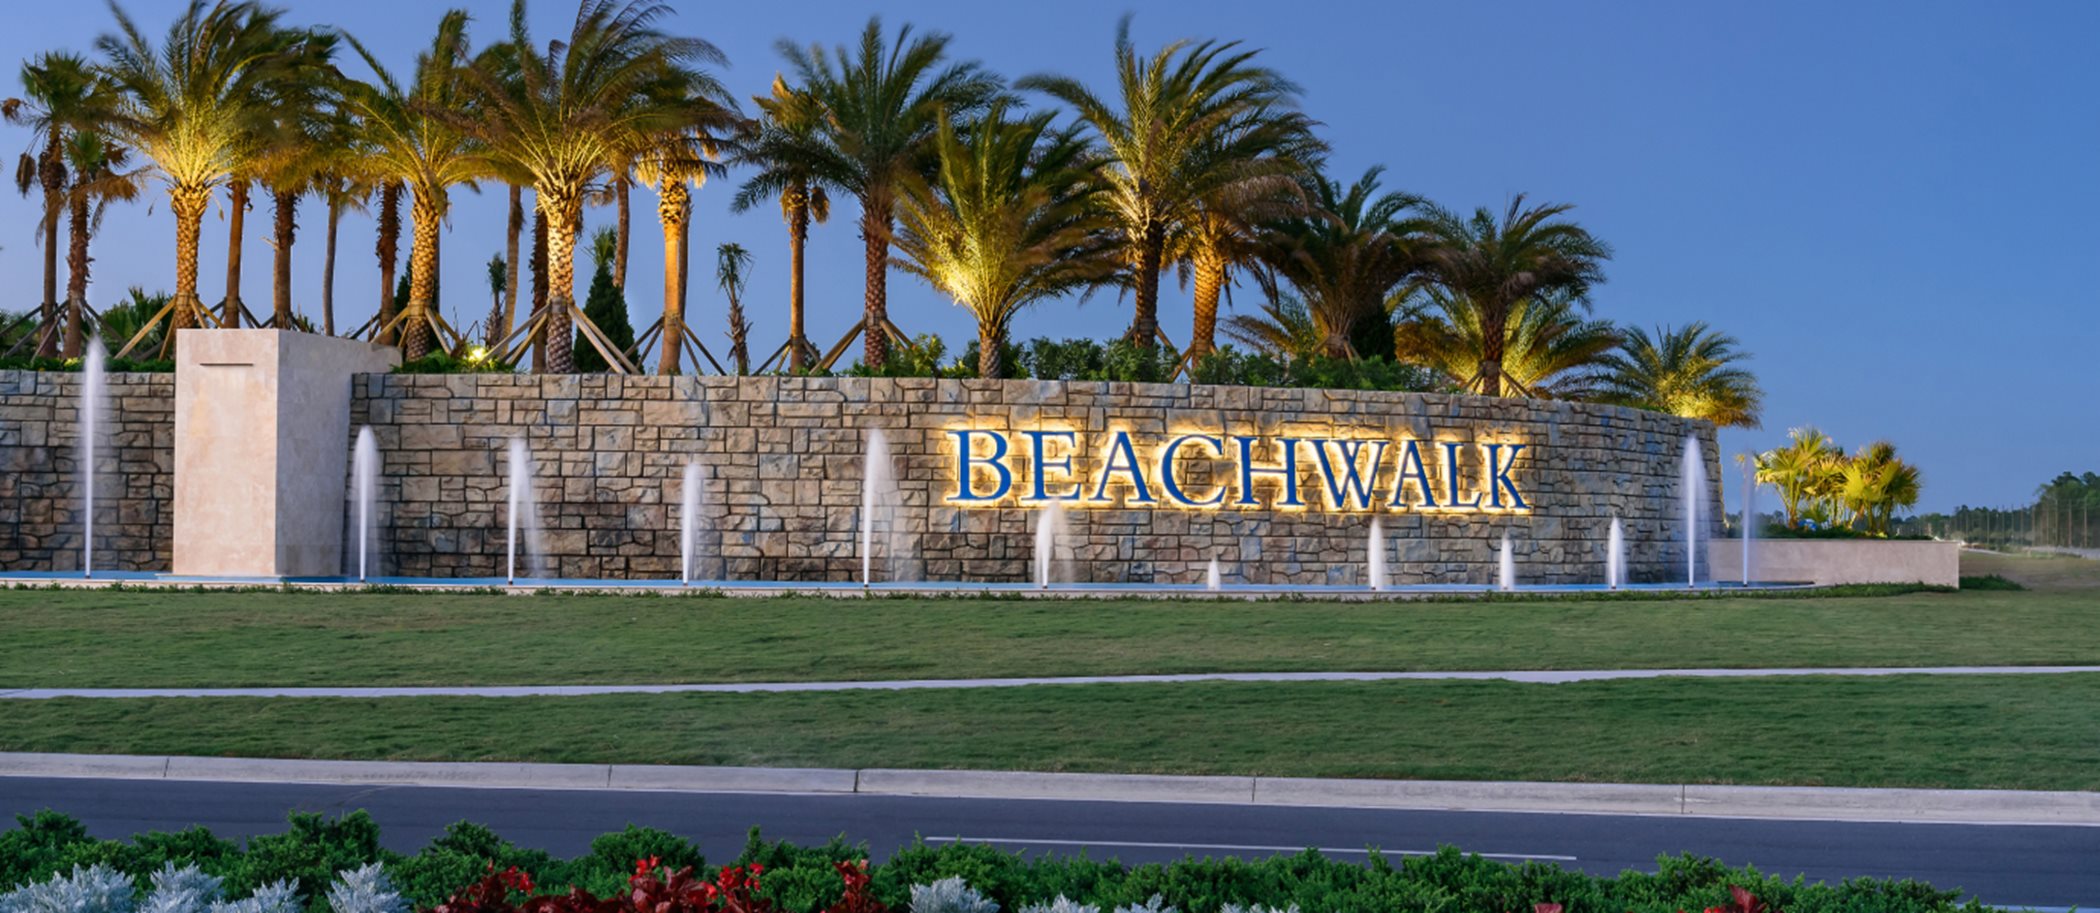 Beachwalk Entrance Sign